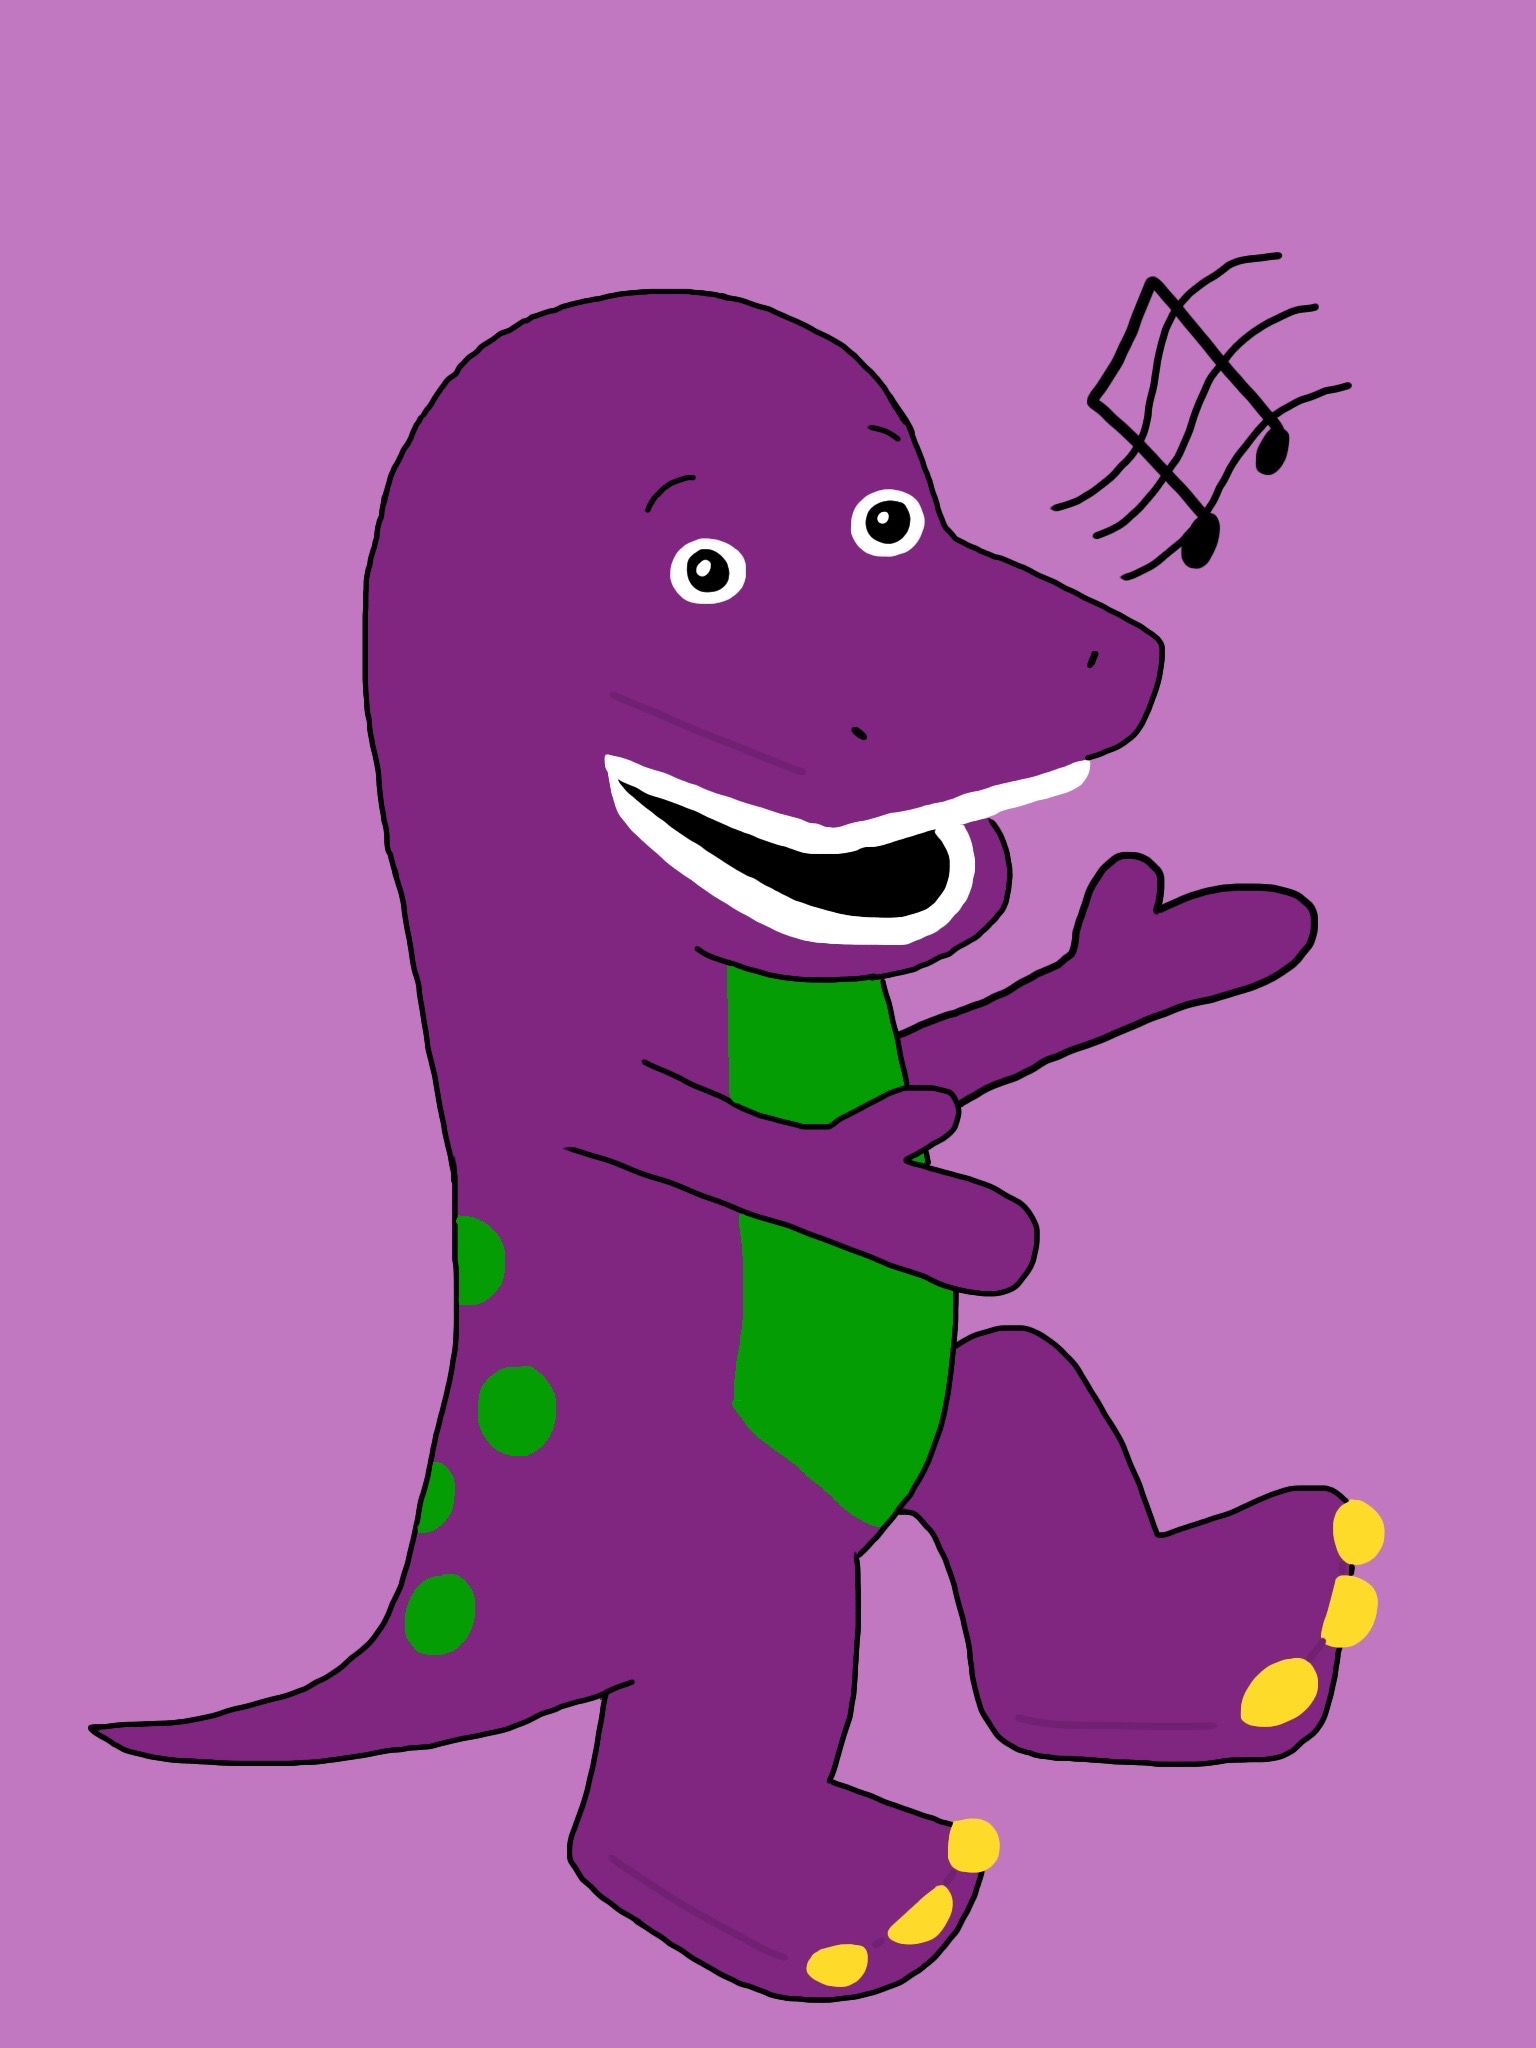 Our Big Purple Dinosaur by joeysclues on DeviantArt